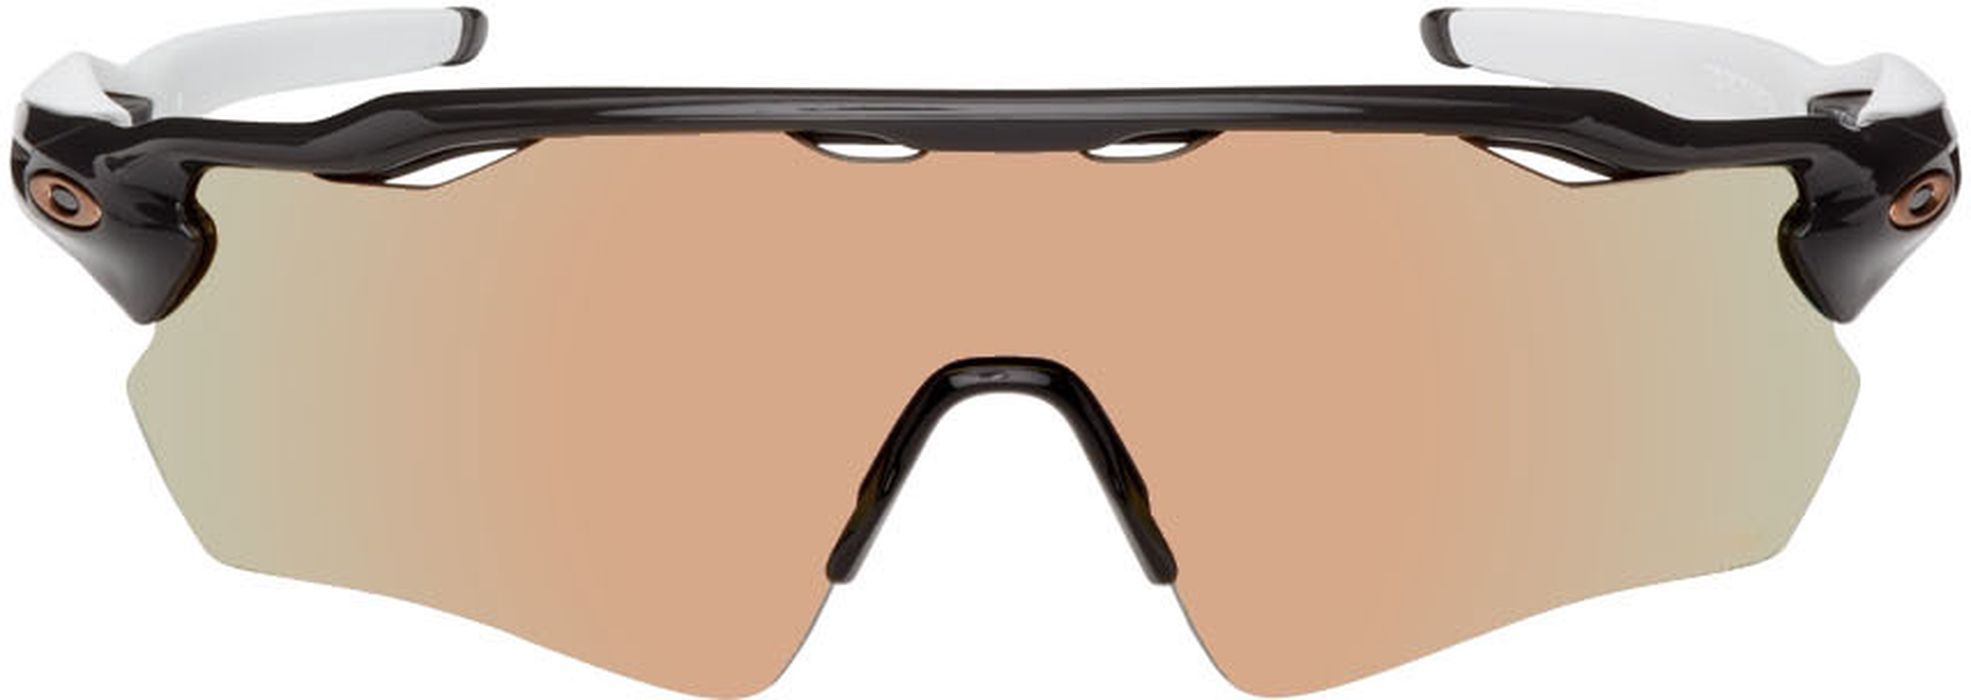 Oakley Black Radar EV Path Sunglasses